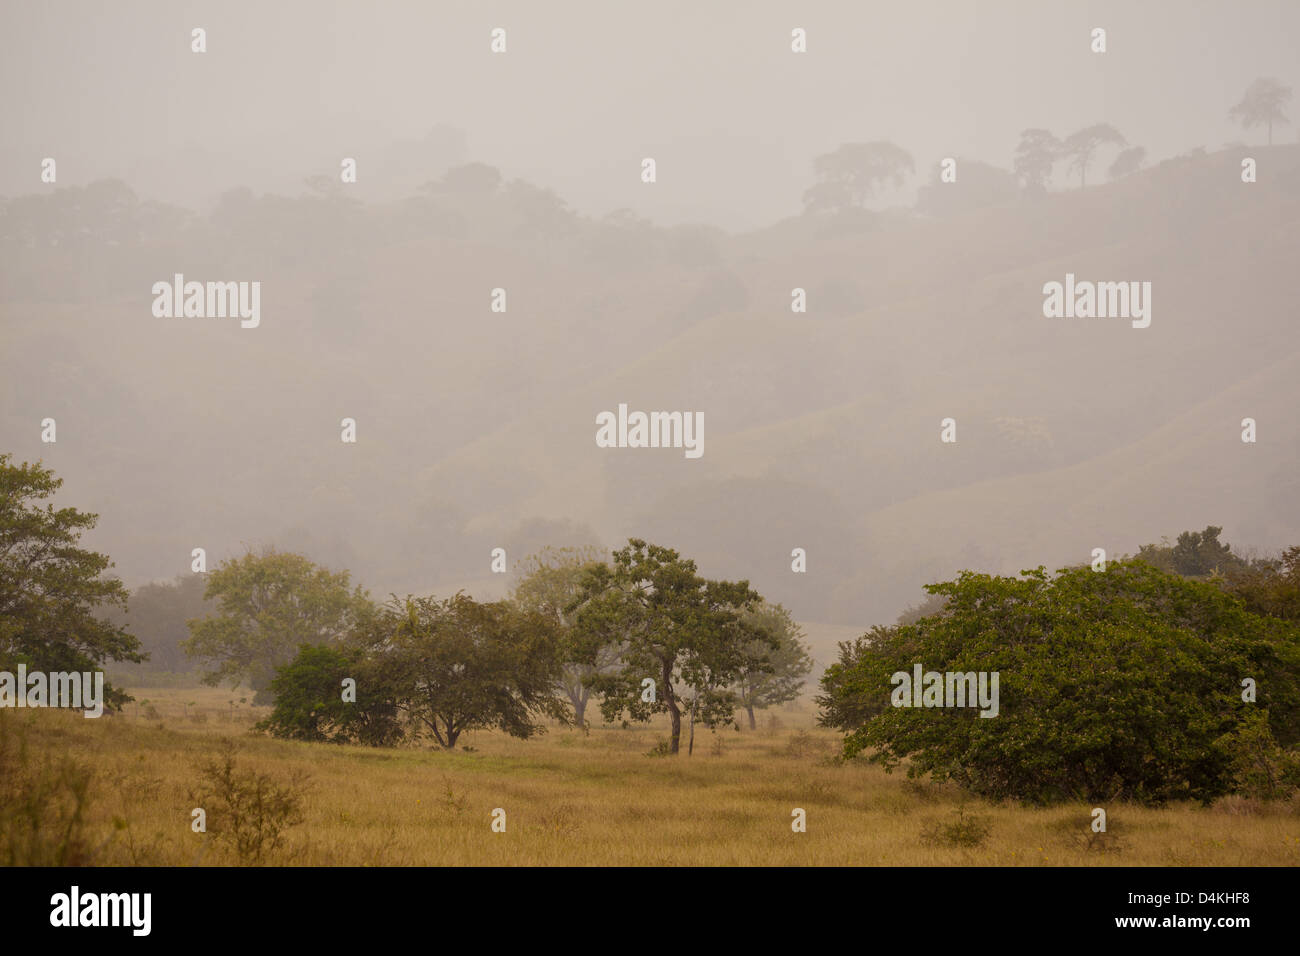 Misty landscape after rainfall near Tonosi, Los Santos province, Republic of Panama. Stock Photo